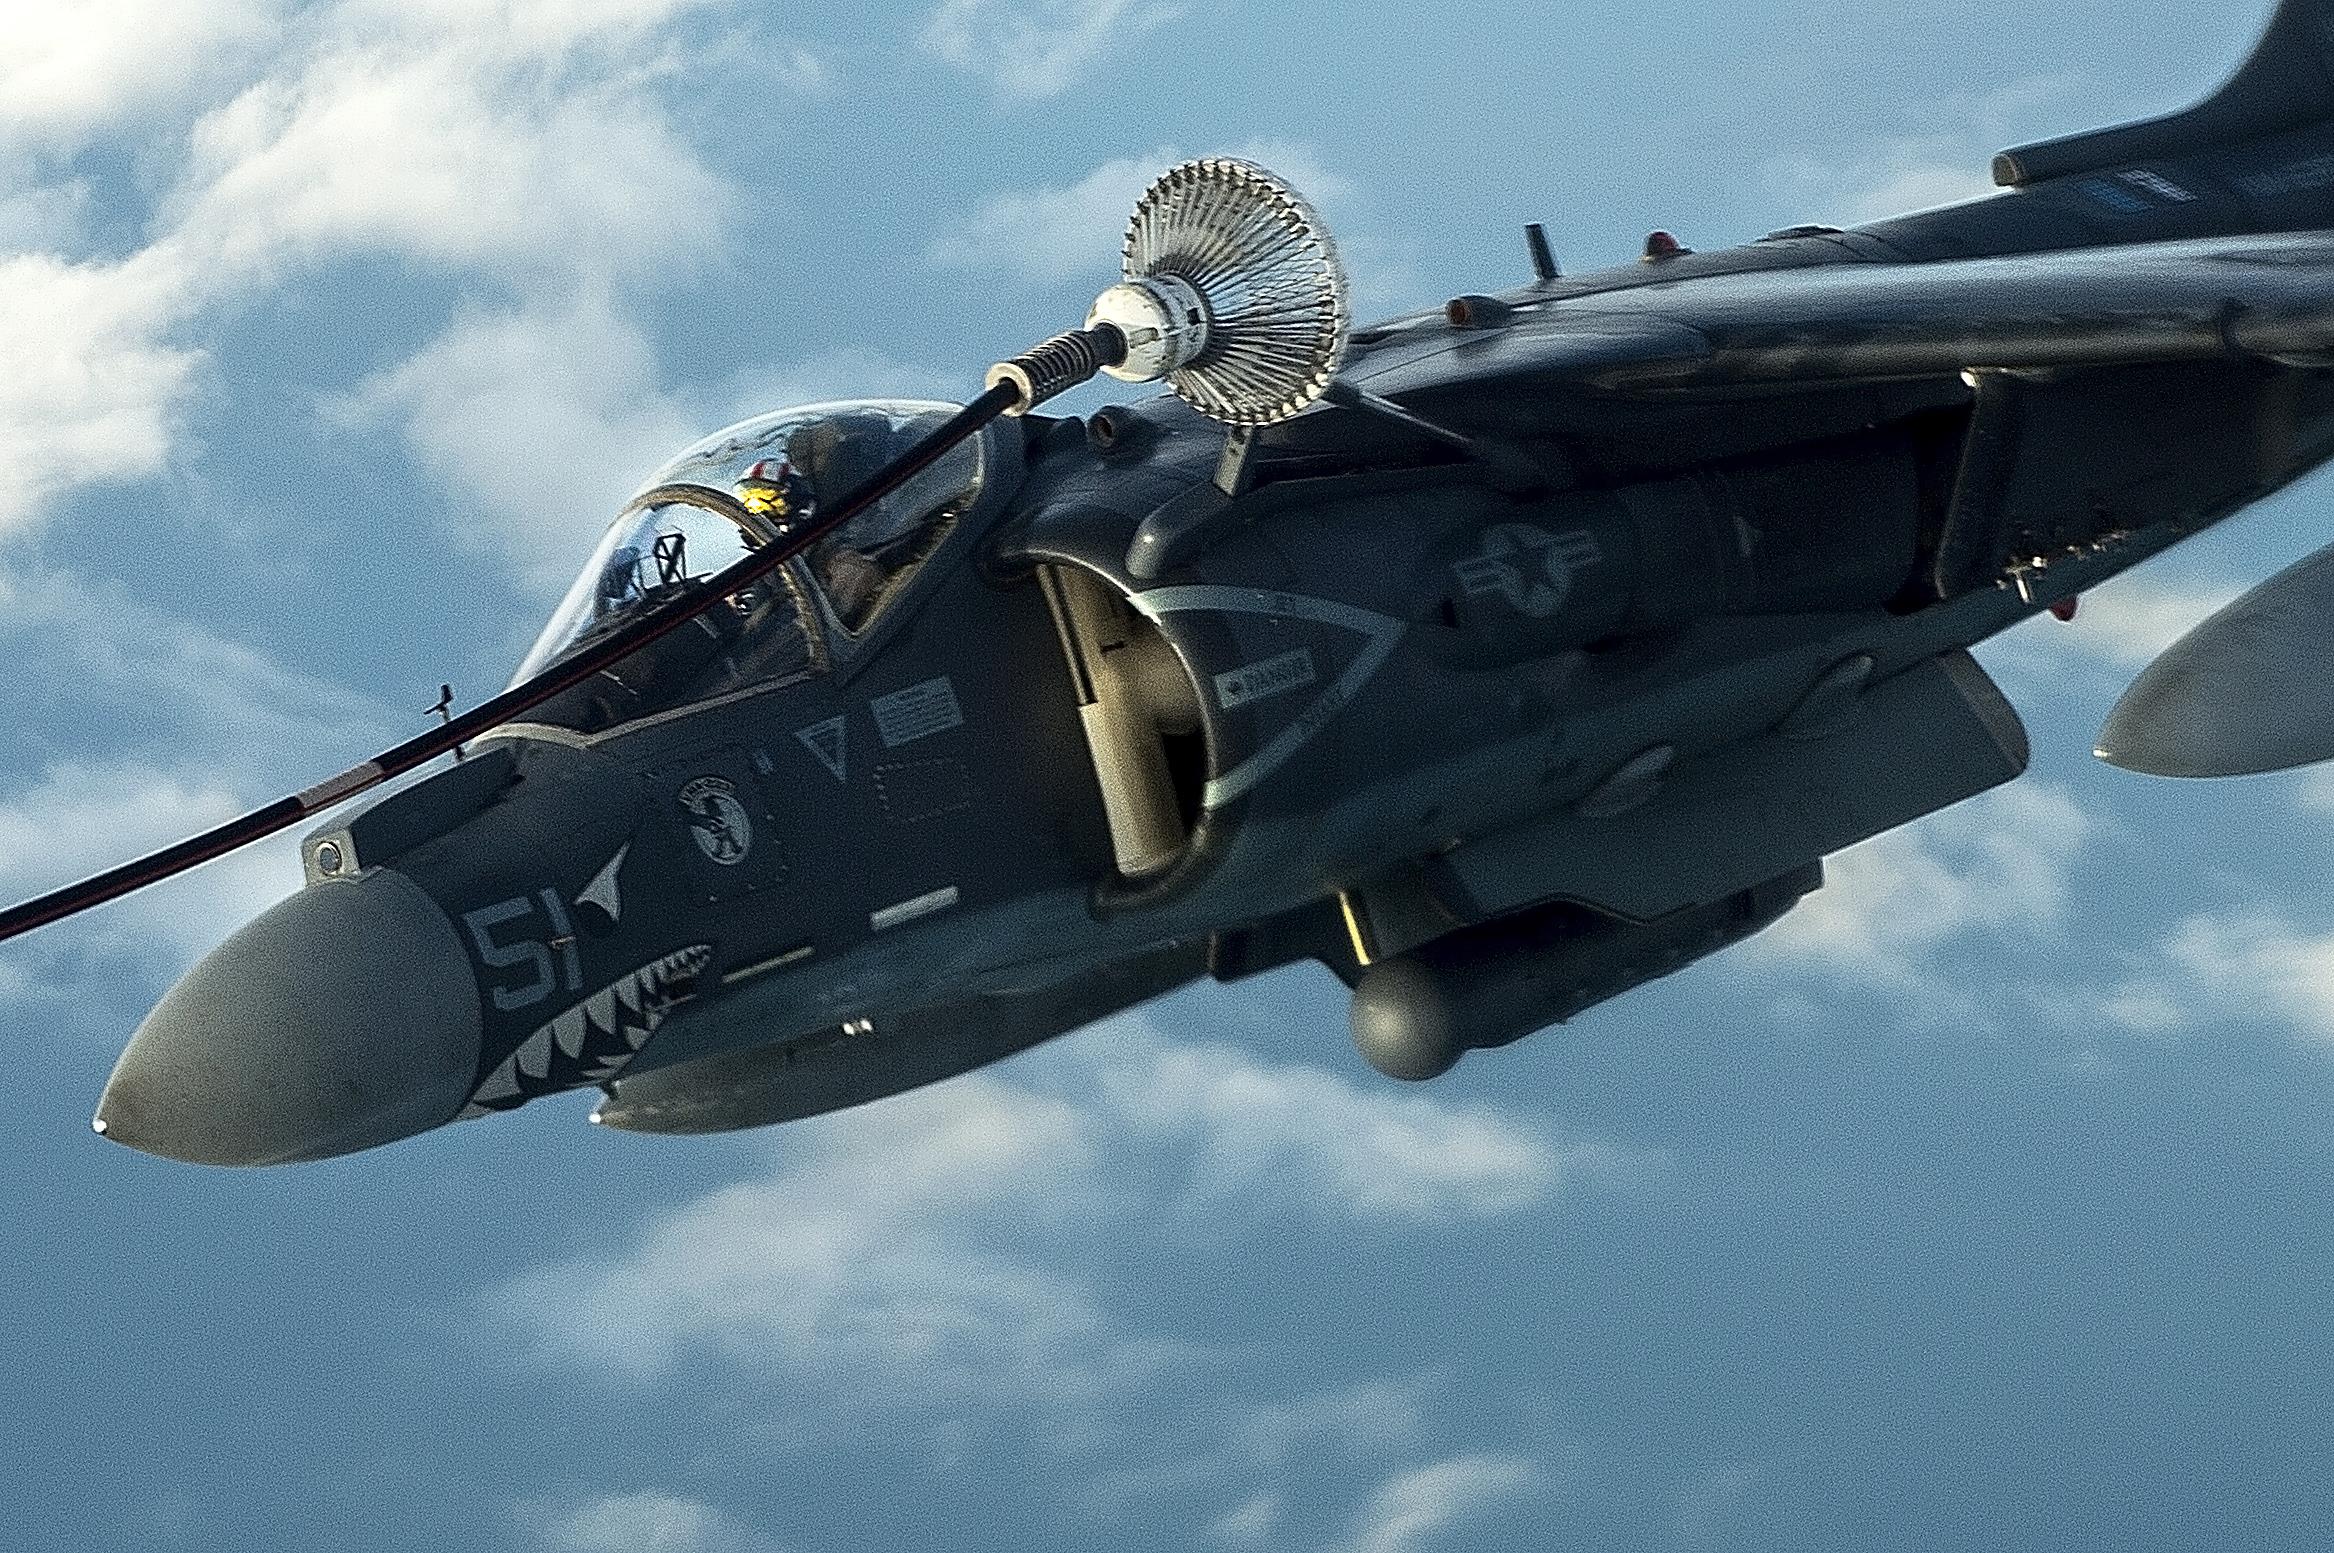 Av 8b Harrier Ii 高解像度 壁紙に使える航空機の画像まとめ アメリカ軍編 Naver まとめ